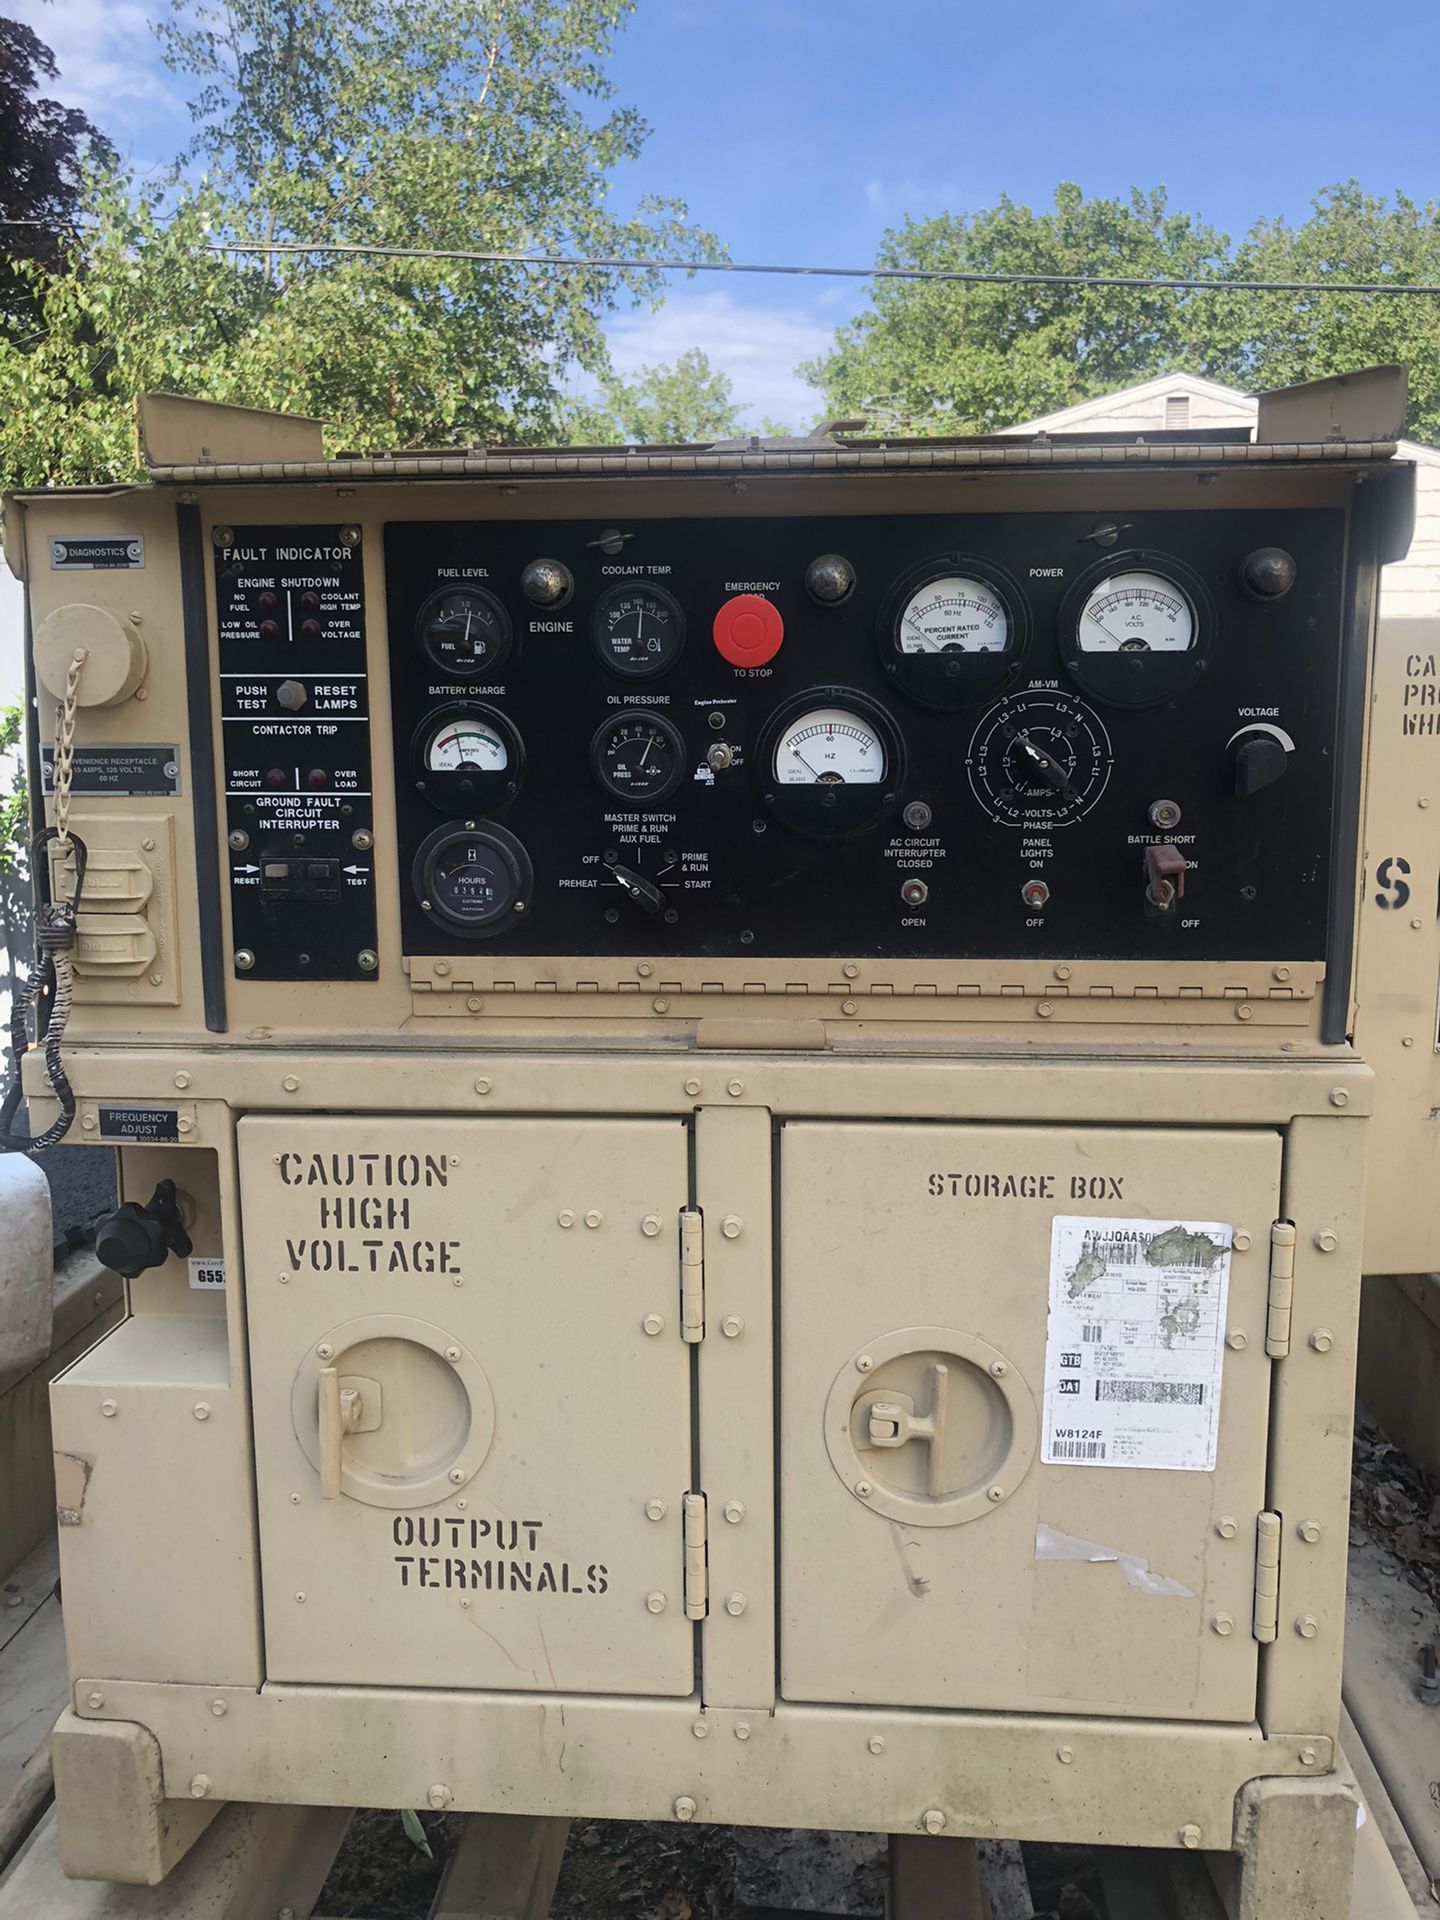 One used generator